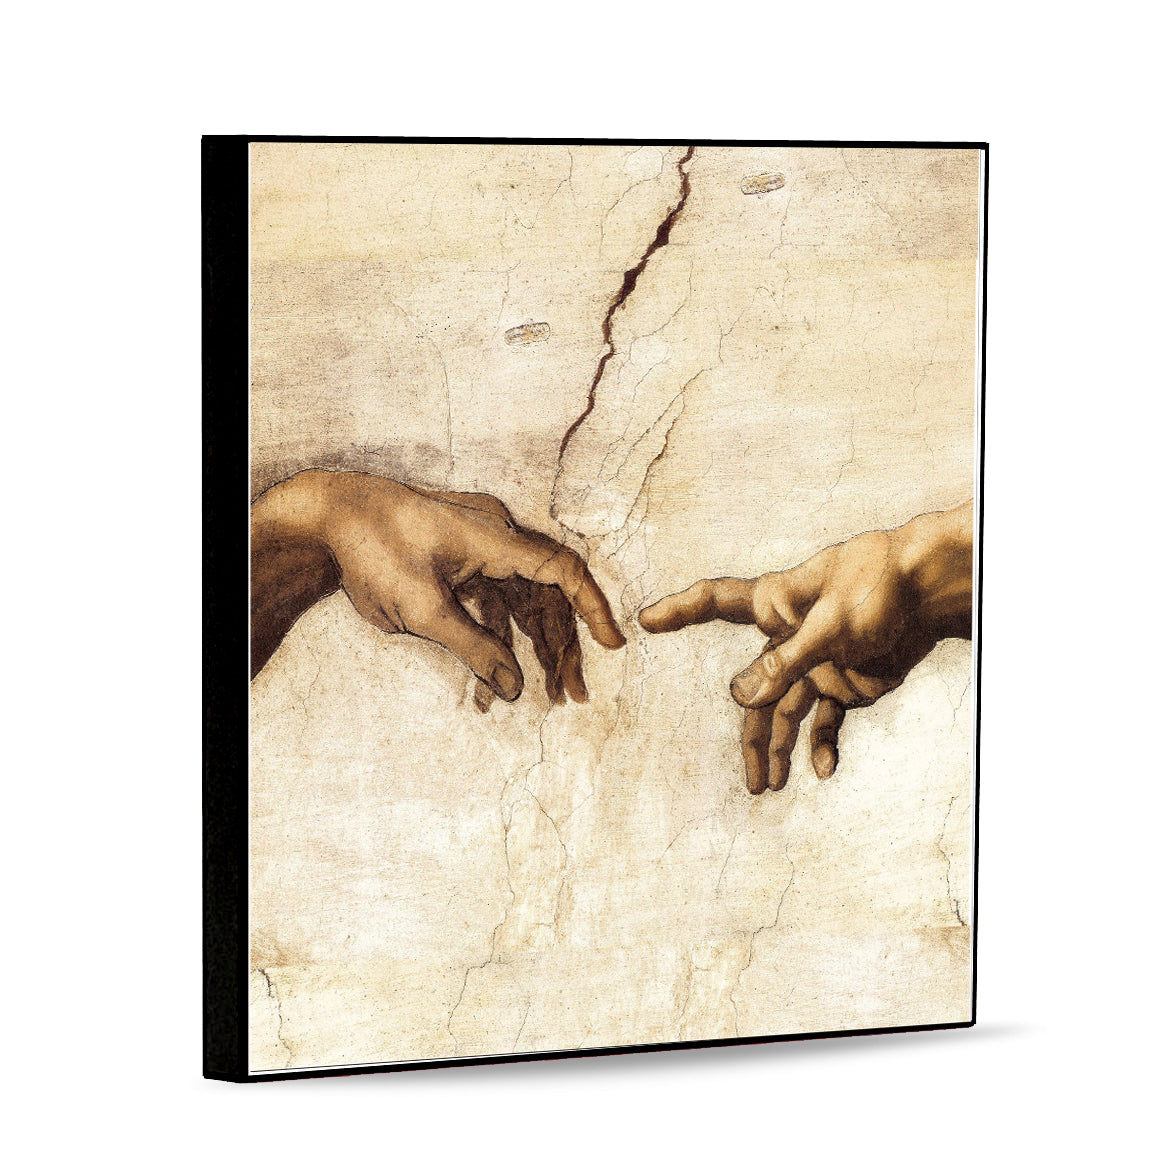 AFFRESCO: Panel Tile - Opera "Creation of Adam" detail by Michelangelo